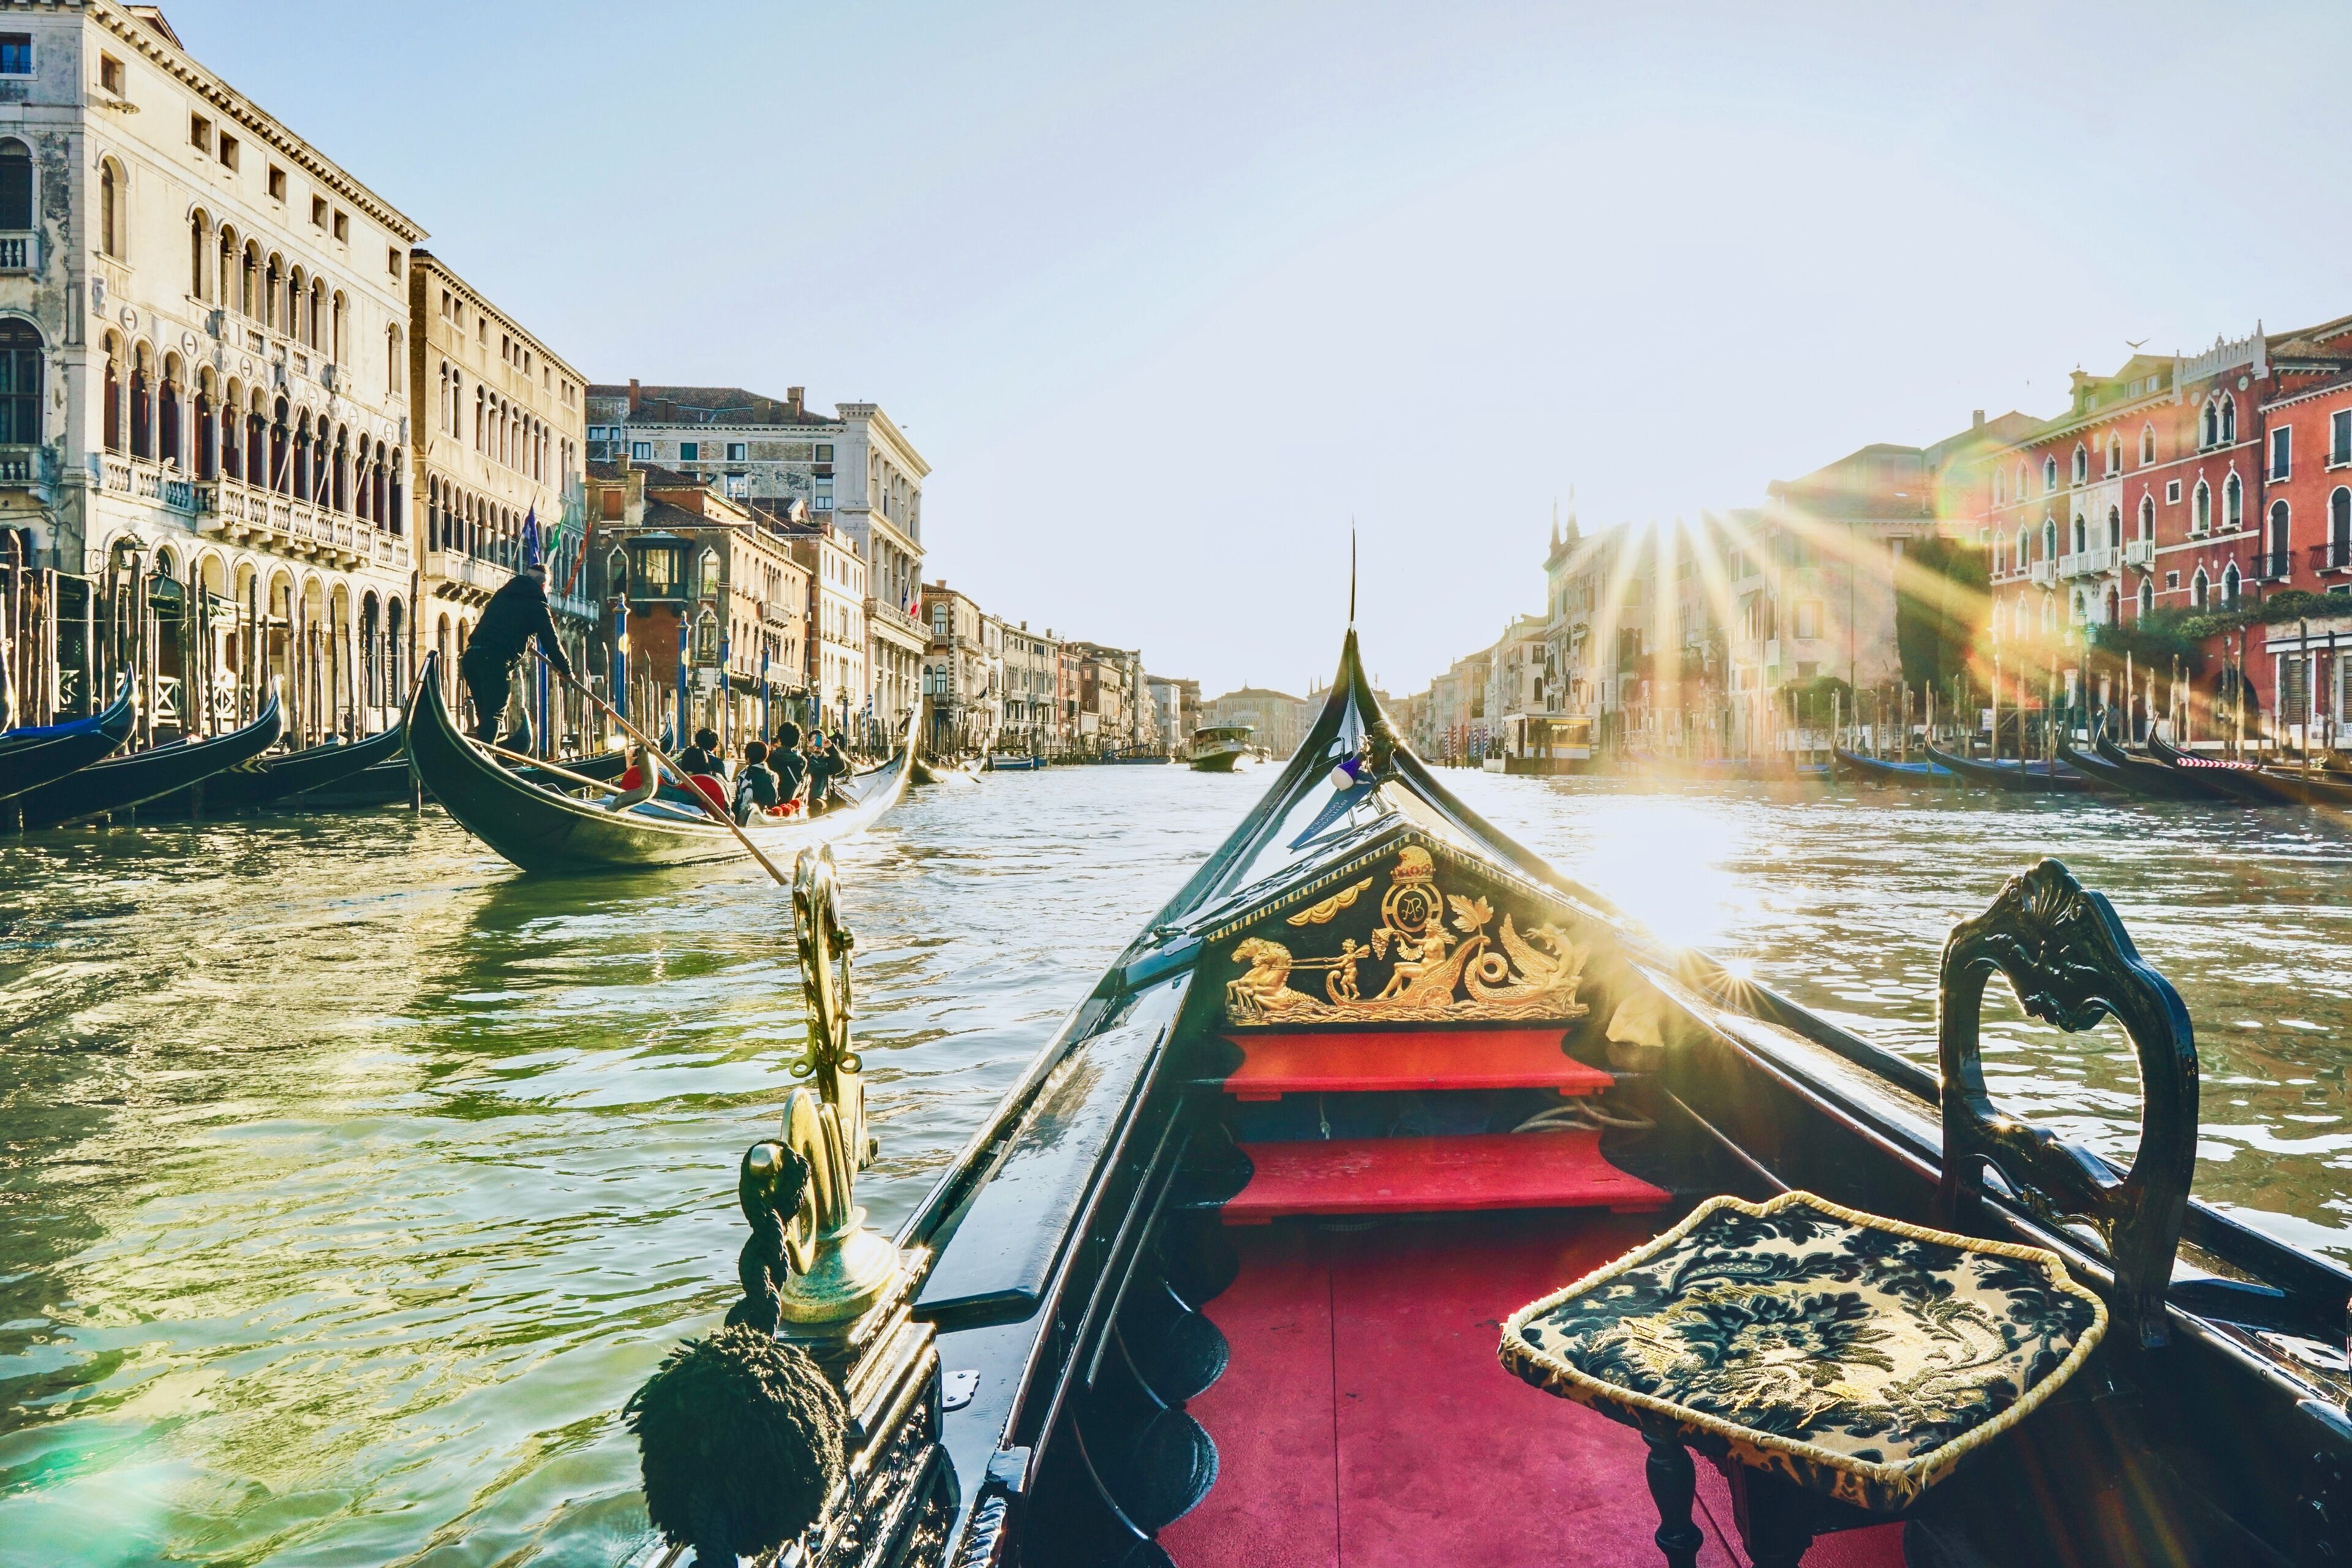 Venice Shared Gondola Ride through the Grand Canal